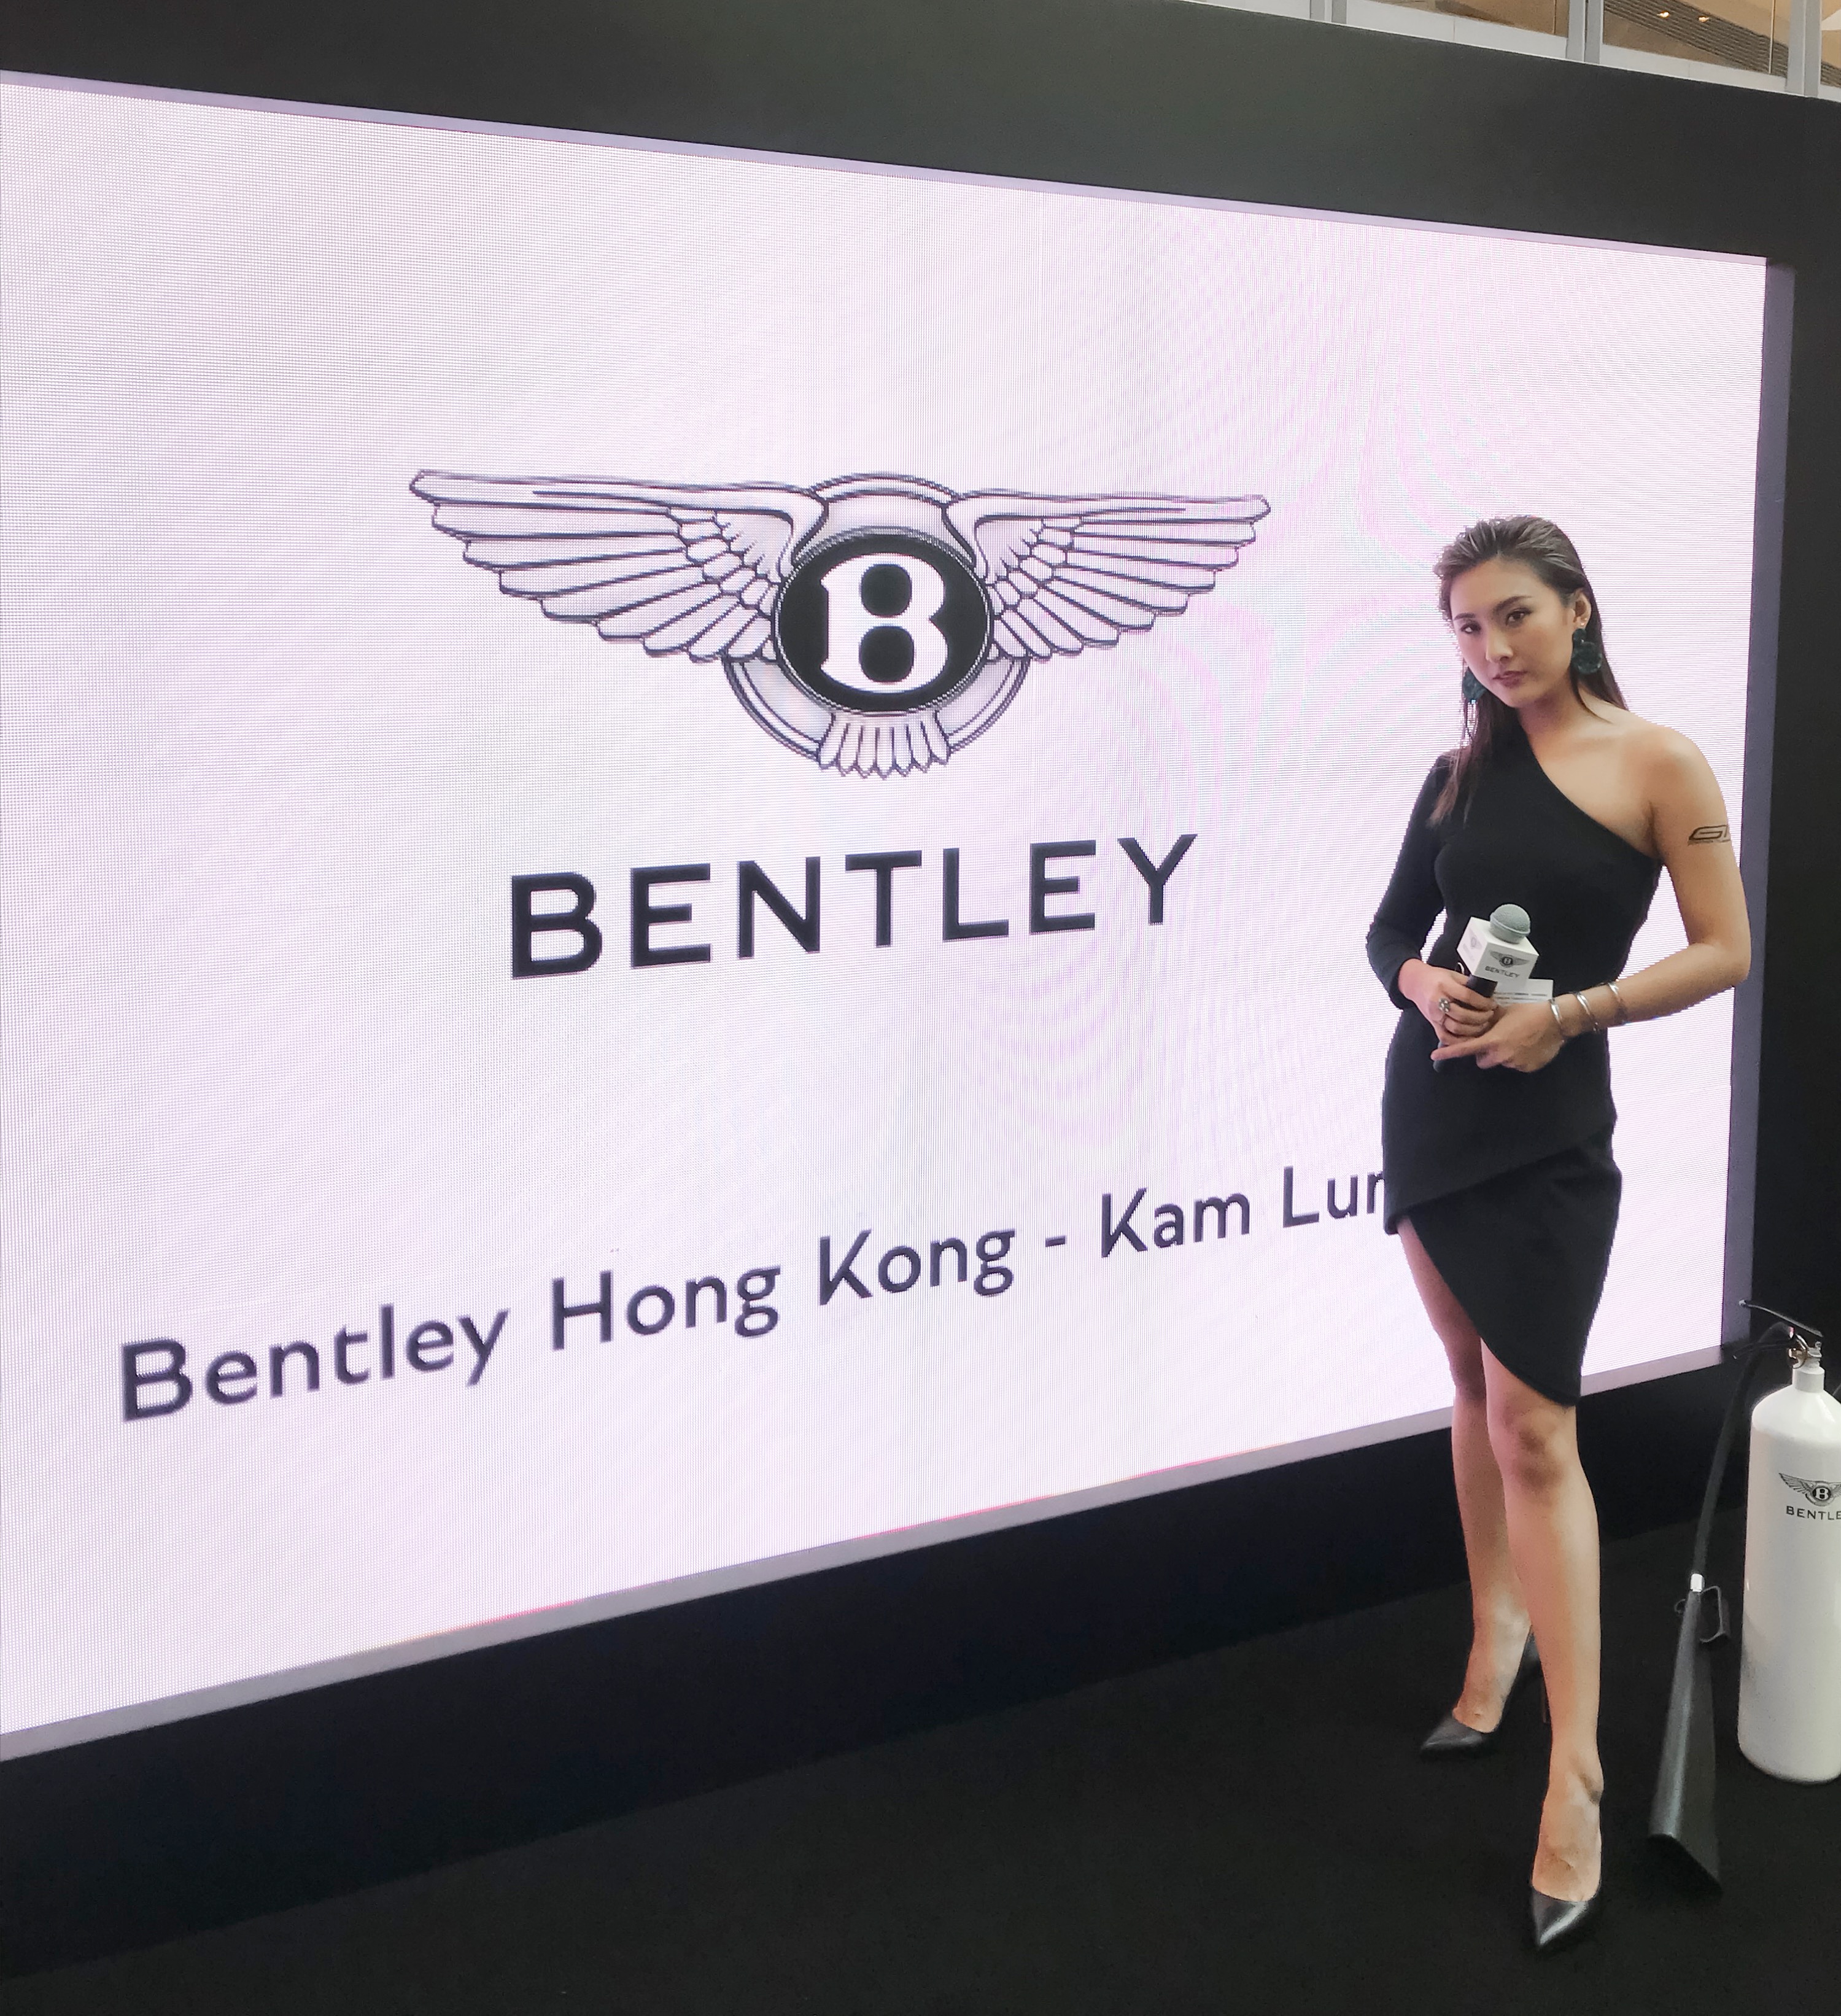 司儀Kelly Chan 陳約臨工作紀錄: Bentley Hong Kong Kam Lung